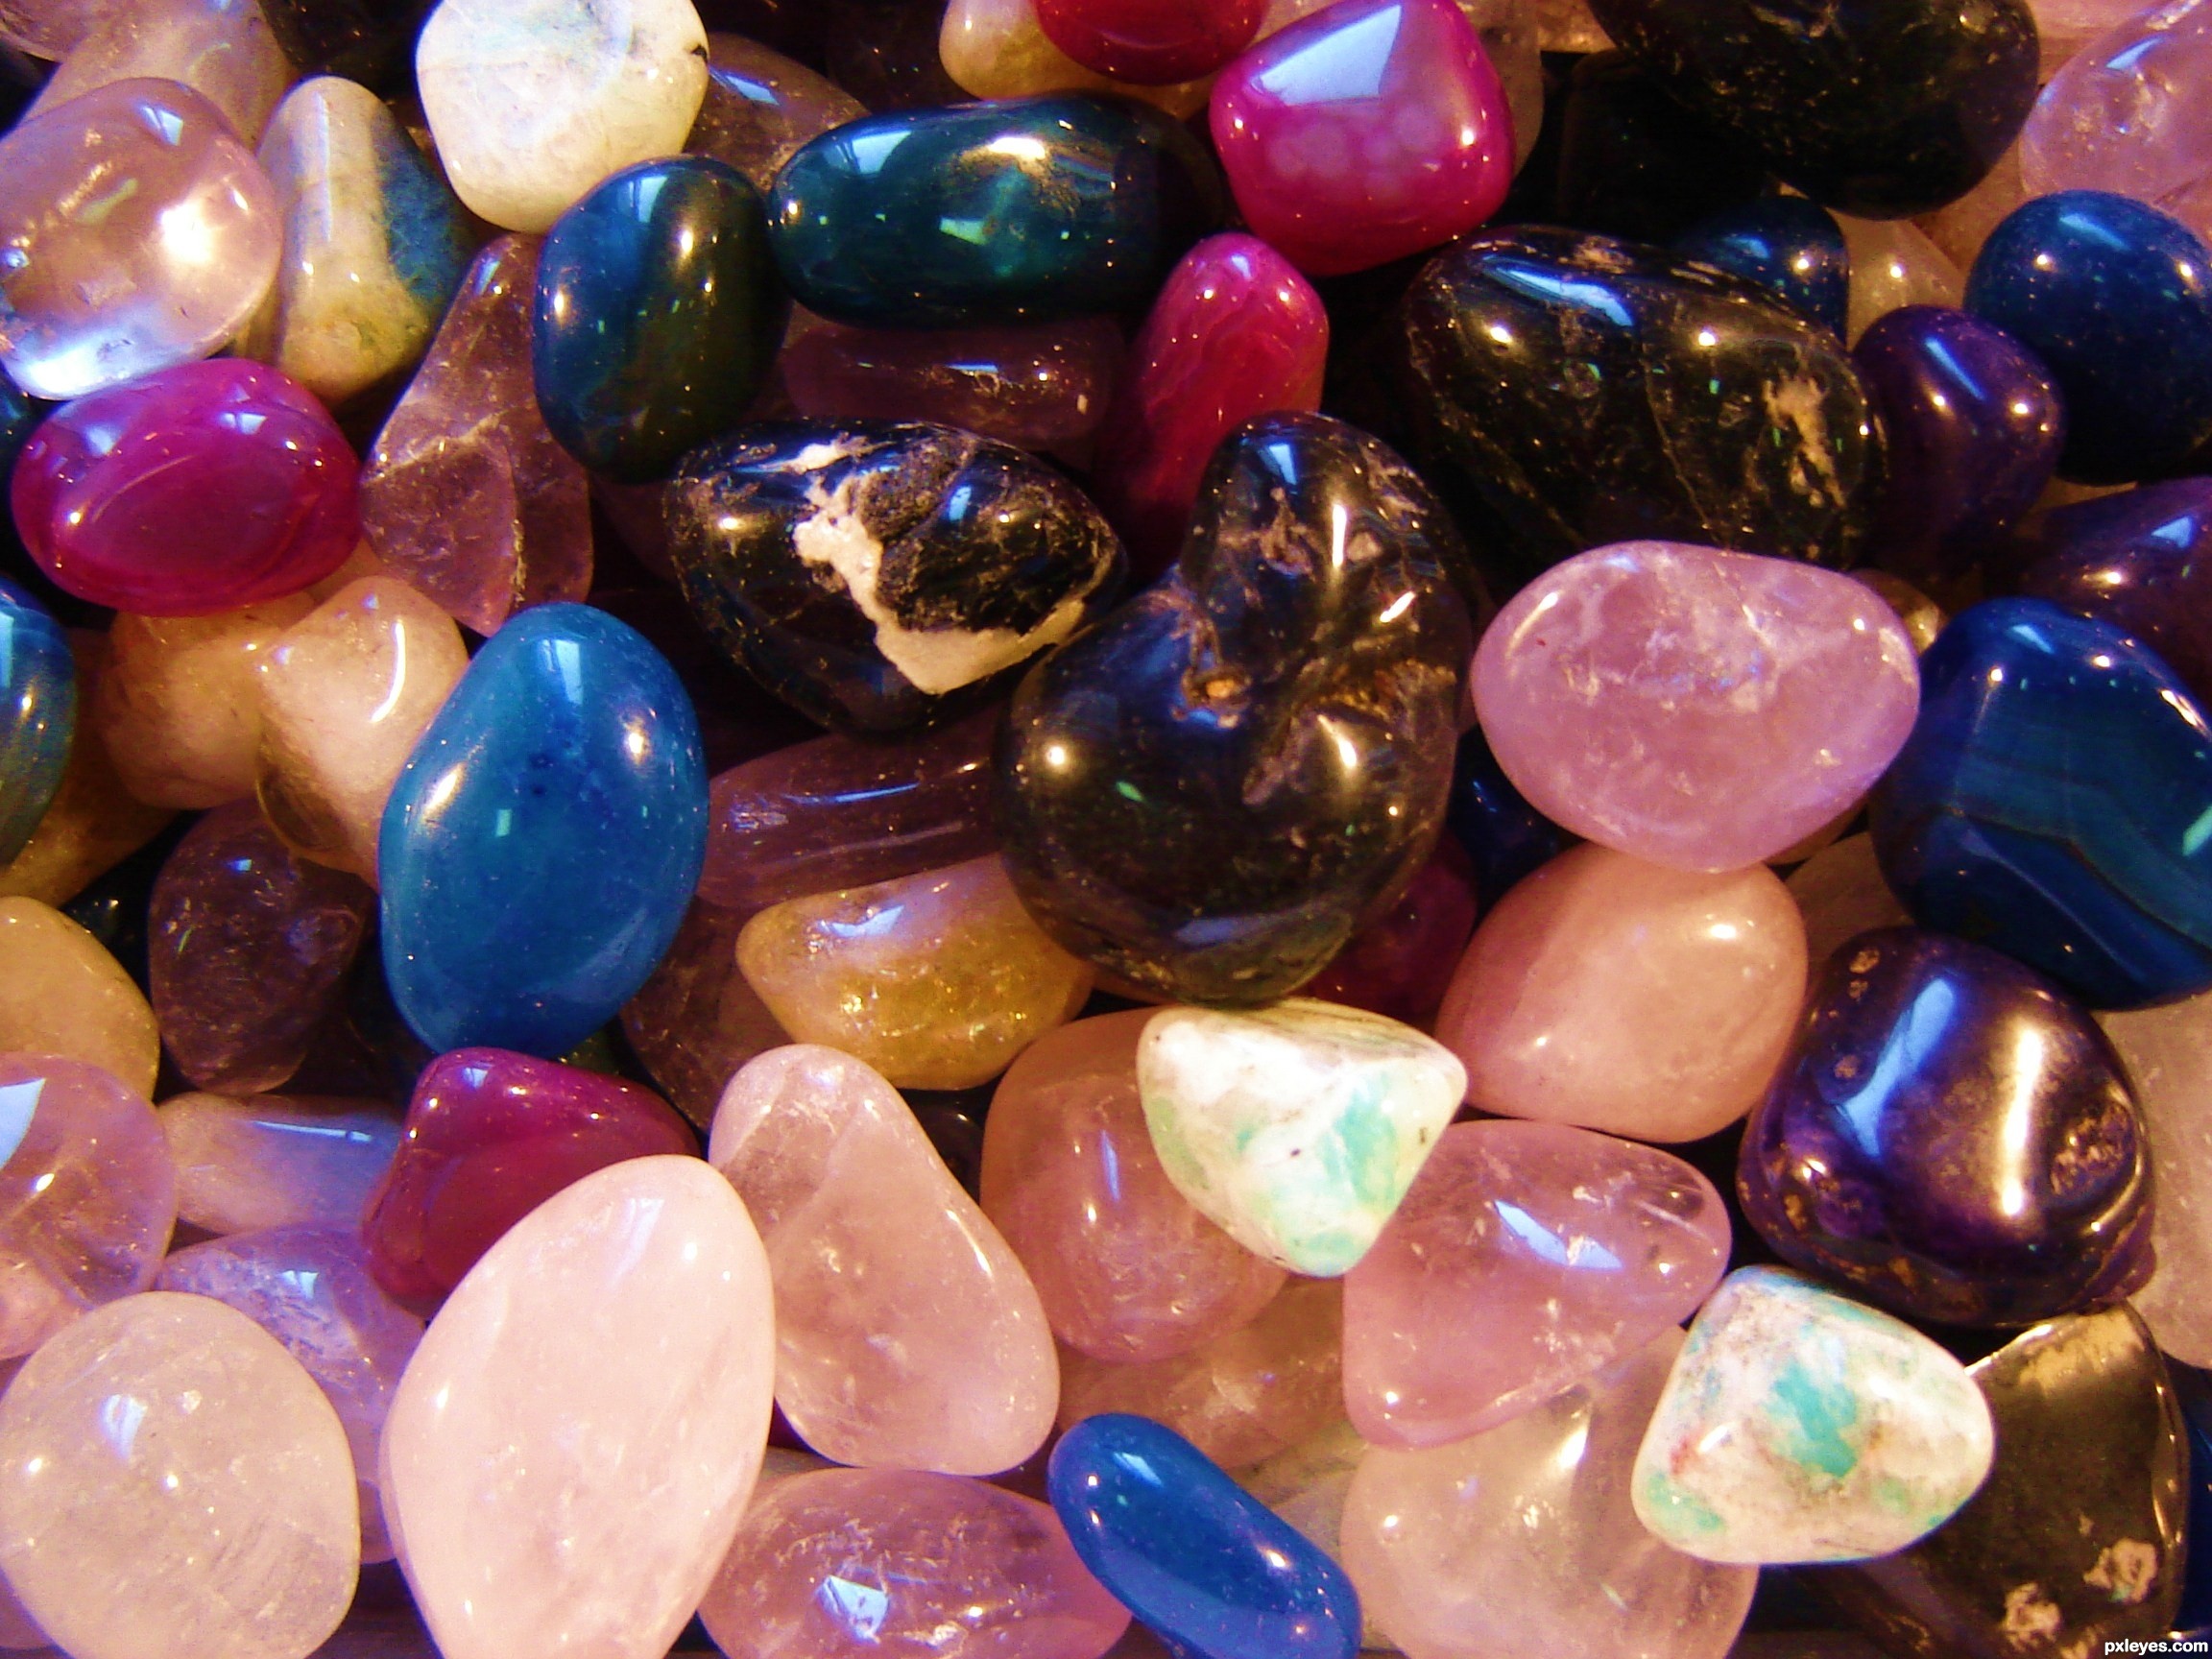 Polished Jelly Bean Tumble Stones